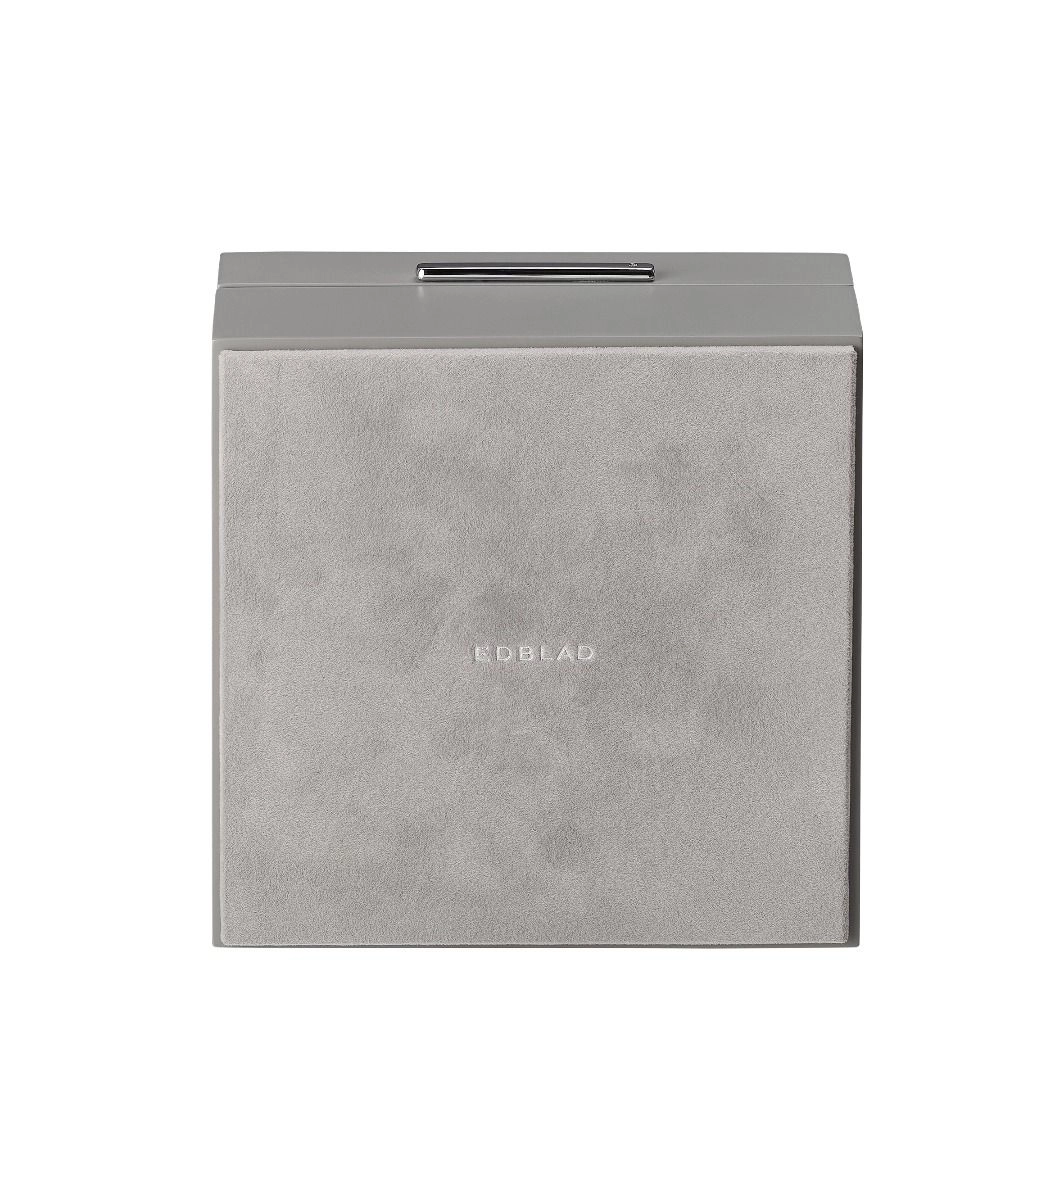 Jewellery Box S Clay Steel - Edblad - Snabb frakt & paketinslagning - Nordicspectra.se